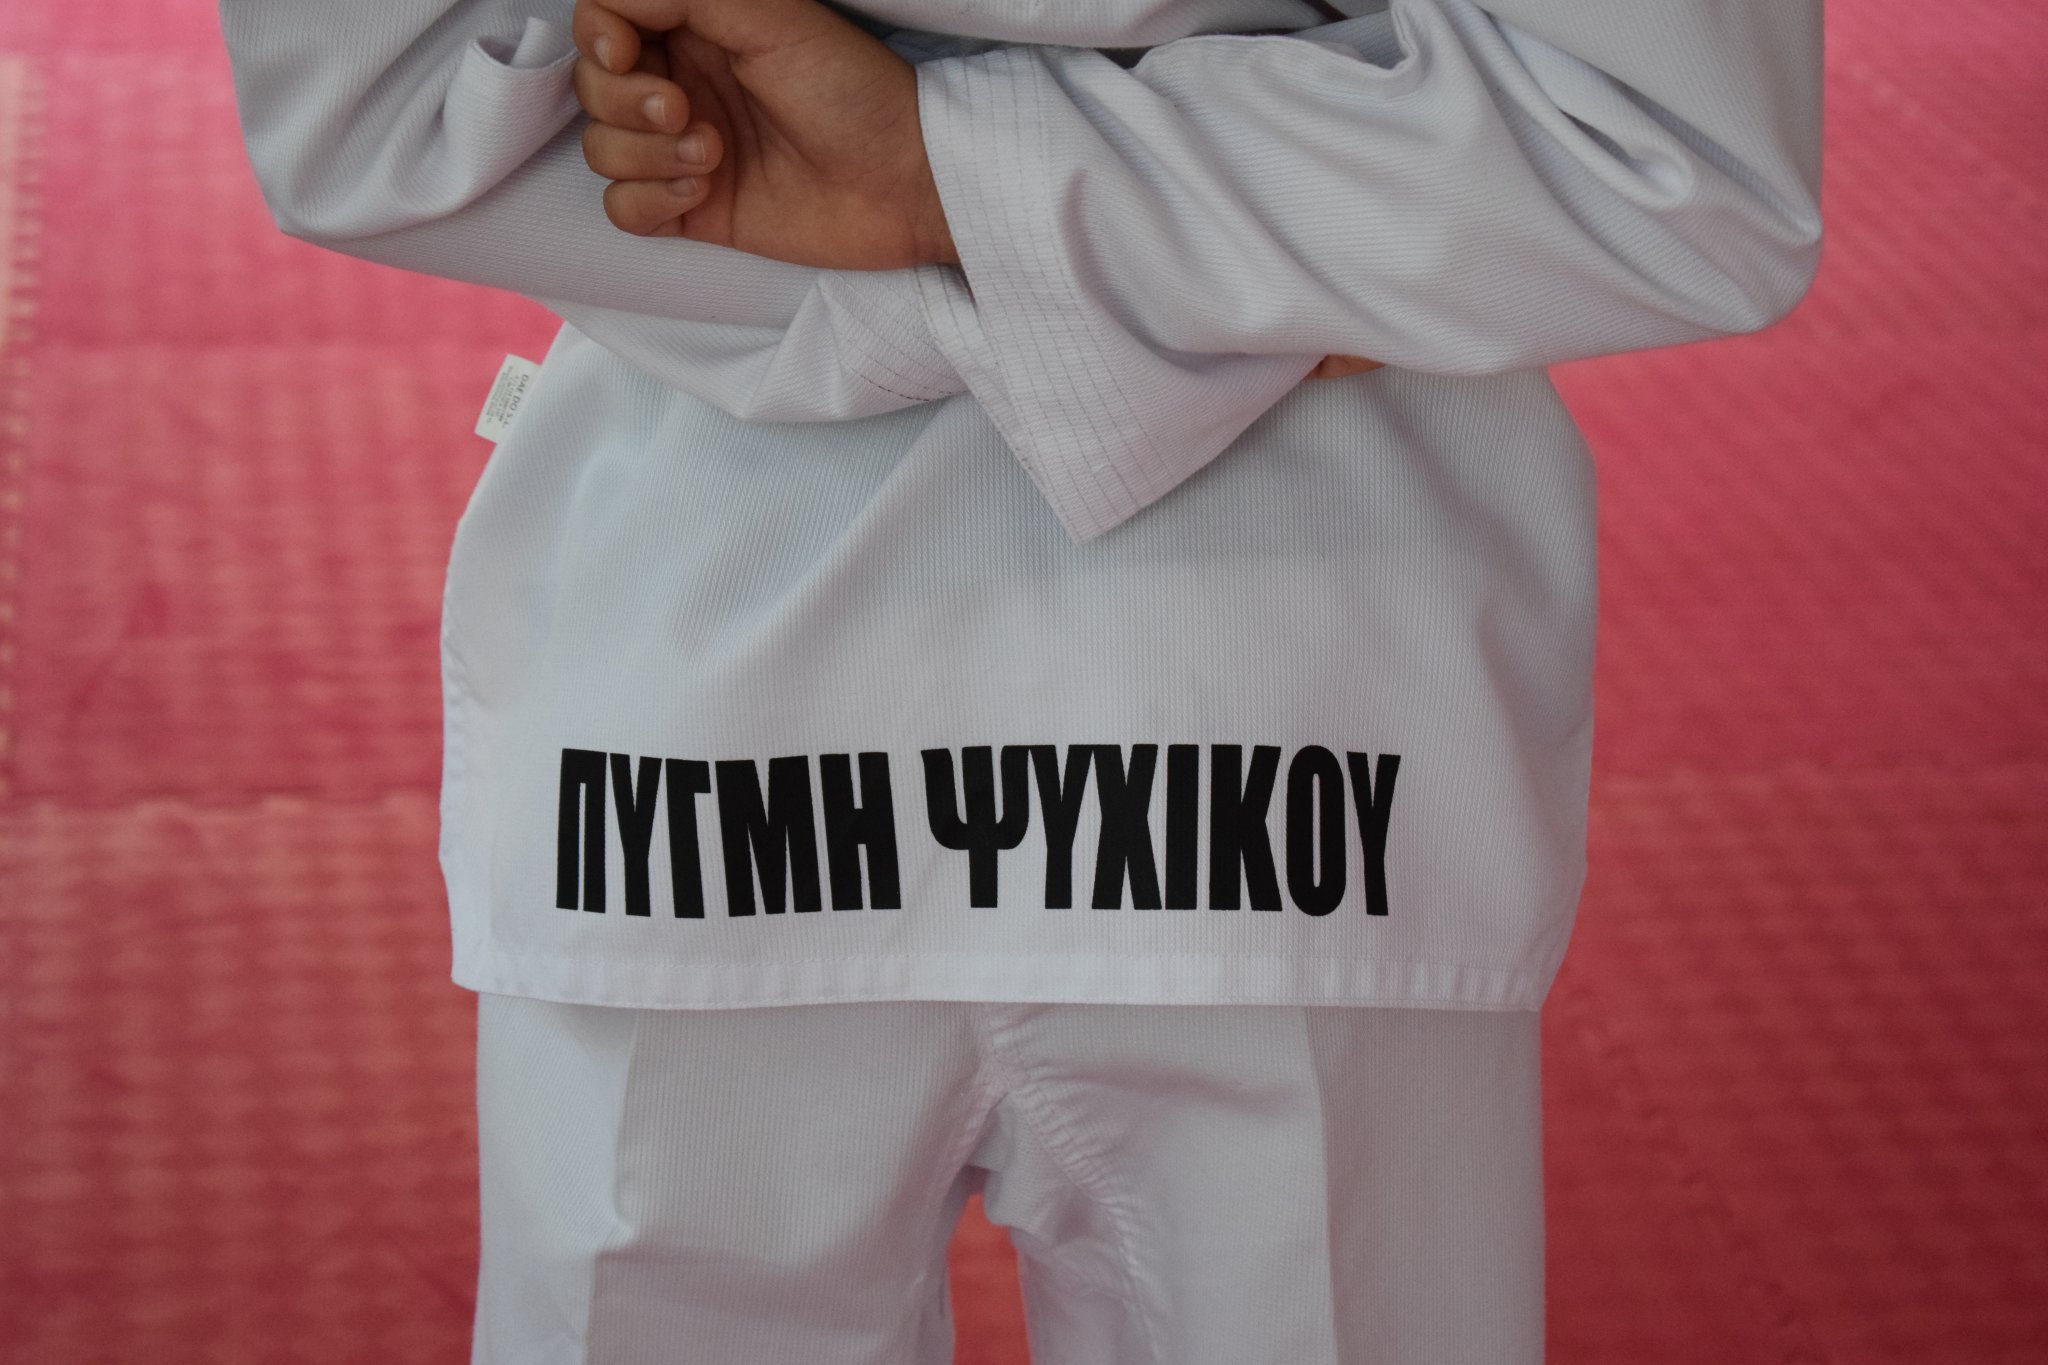 pygmi-psichikou-taekwondo-11-sportshunter